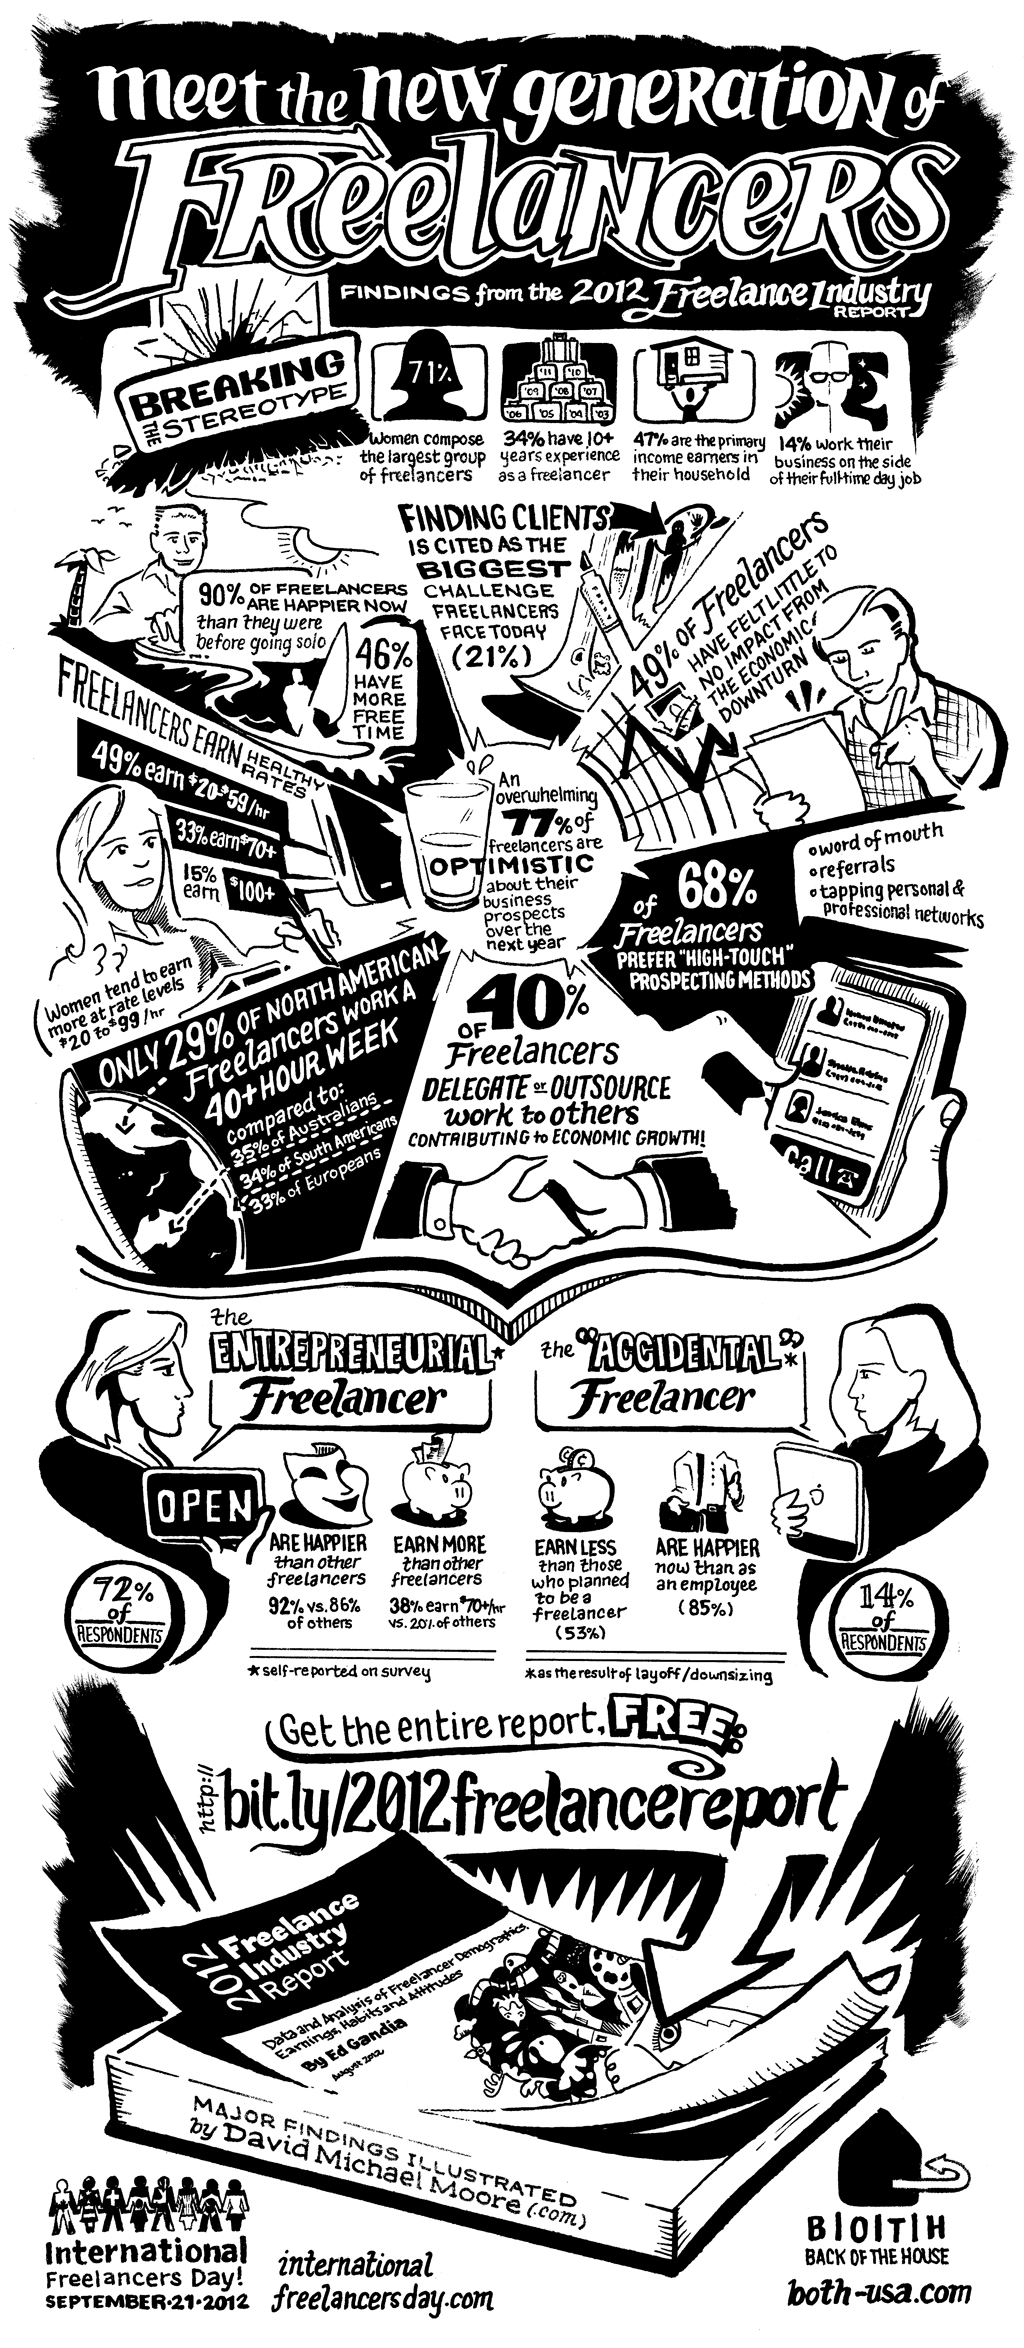 2012 Freelancer Report Infographic (image)